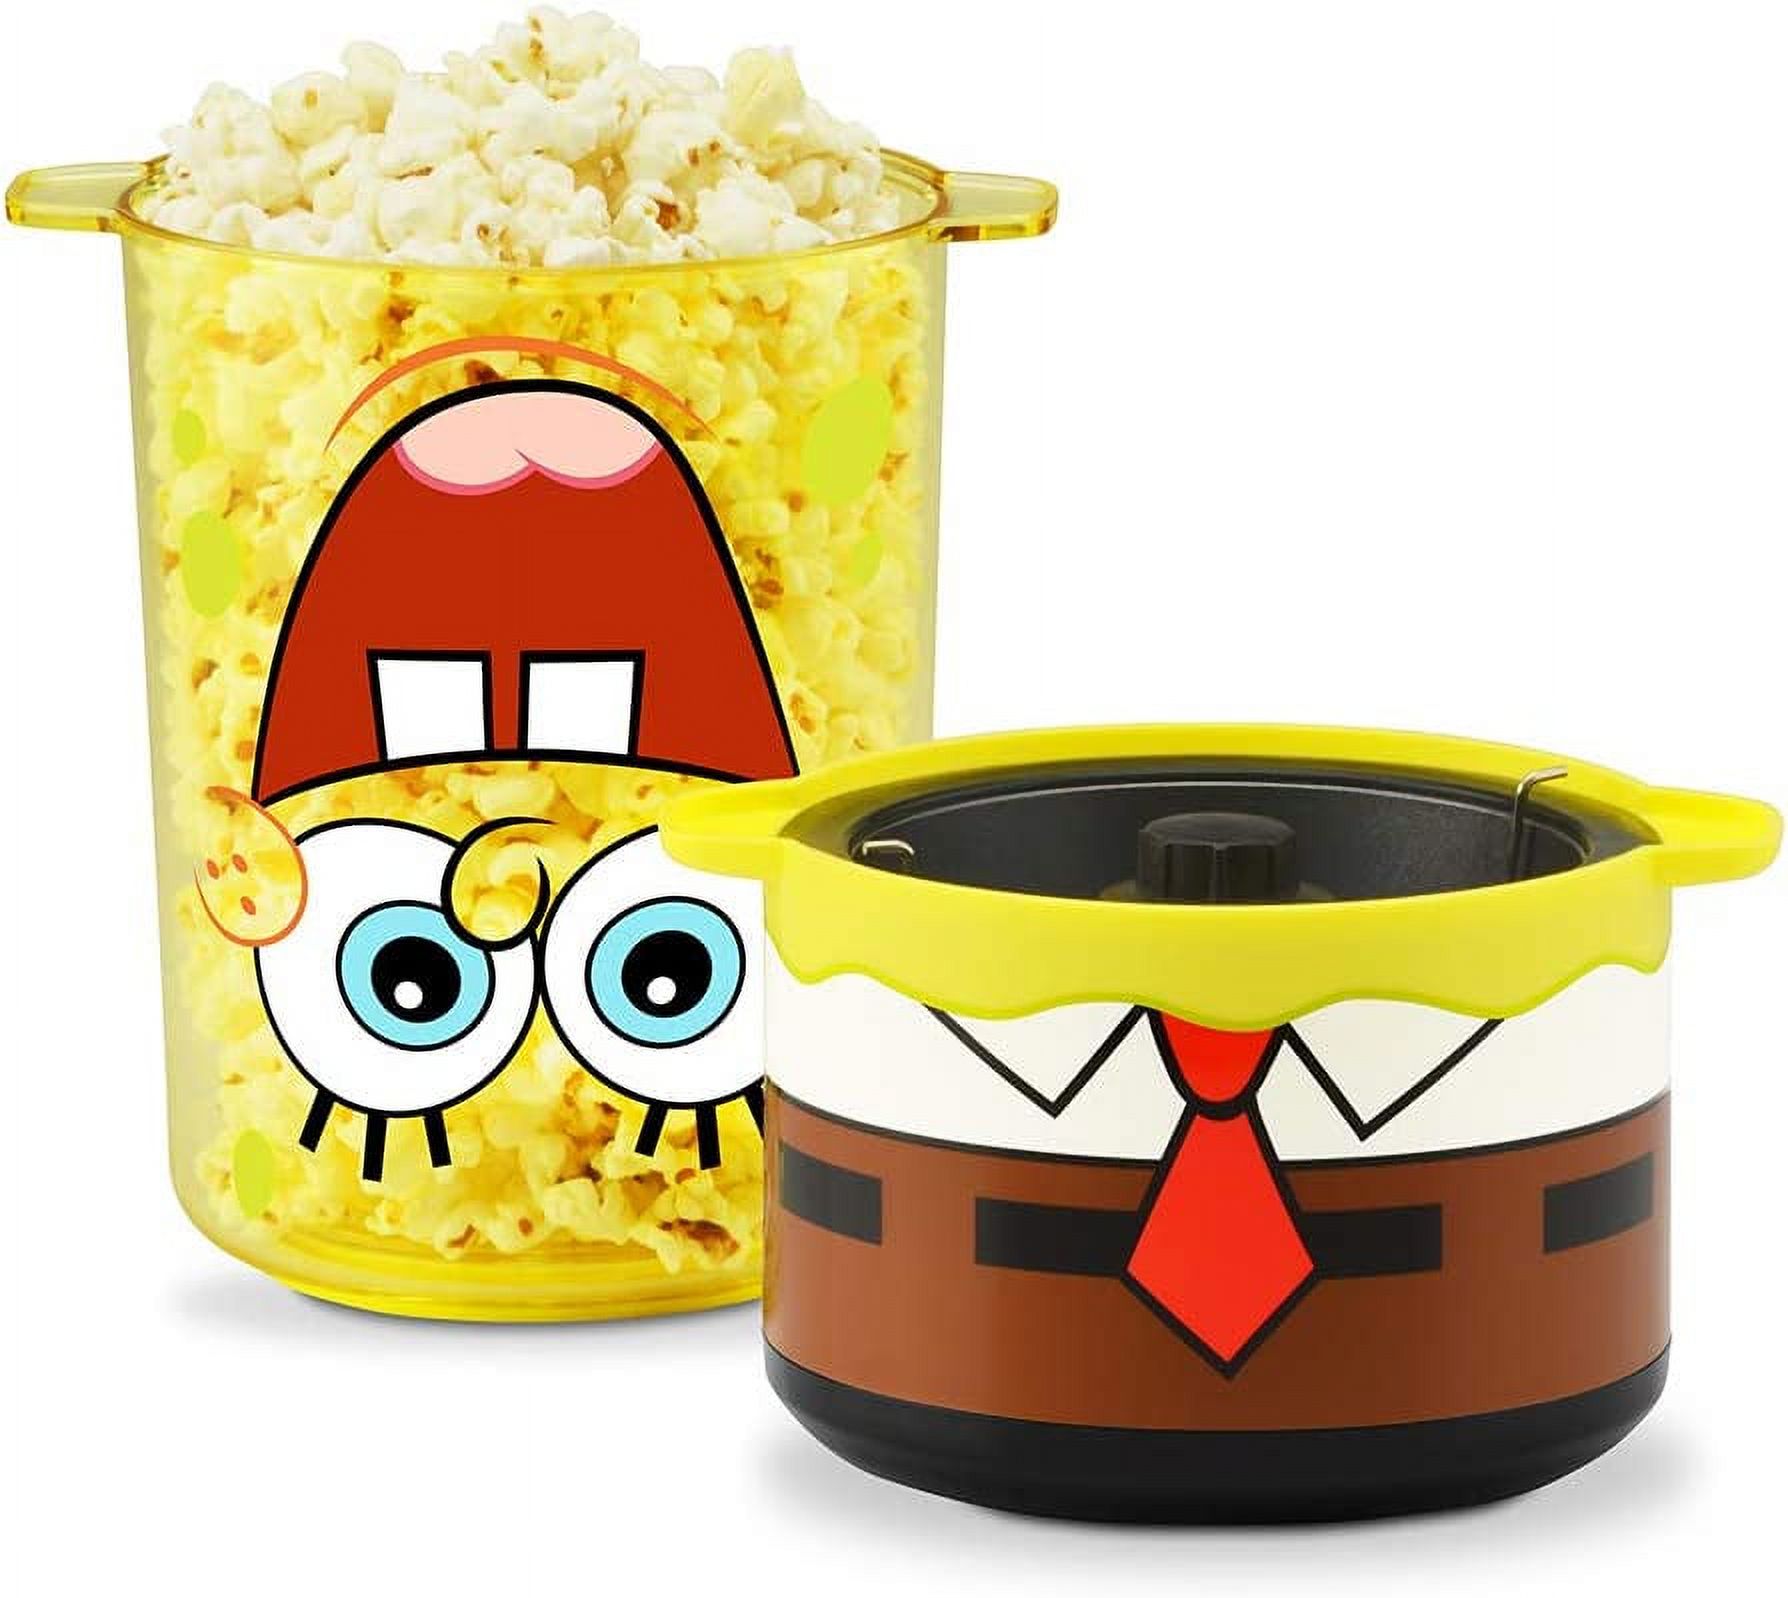 Nickelodeon Spongebob Stir Popcorn Popper, One Size, Yellow - image 2 of 3